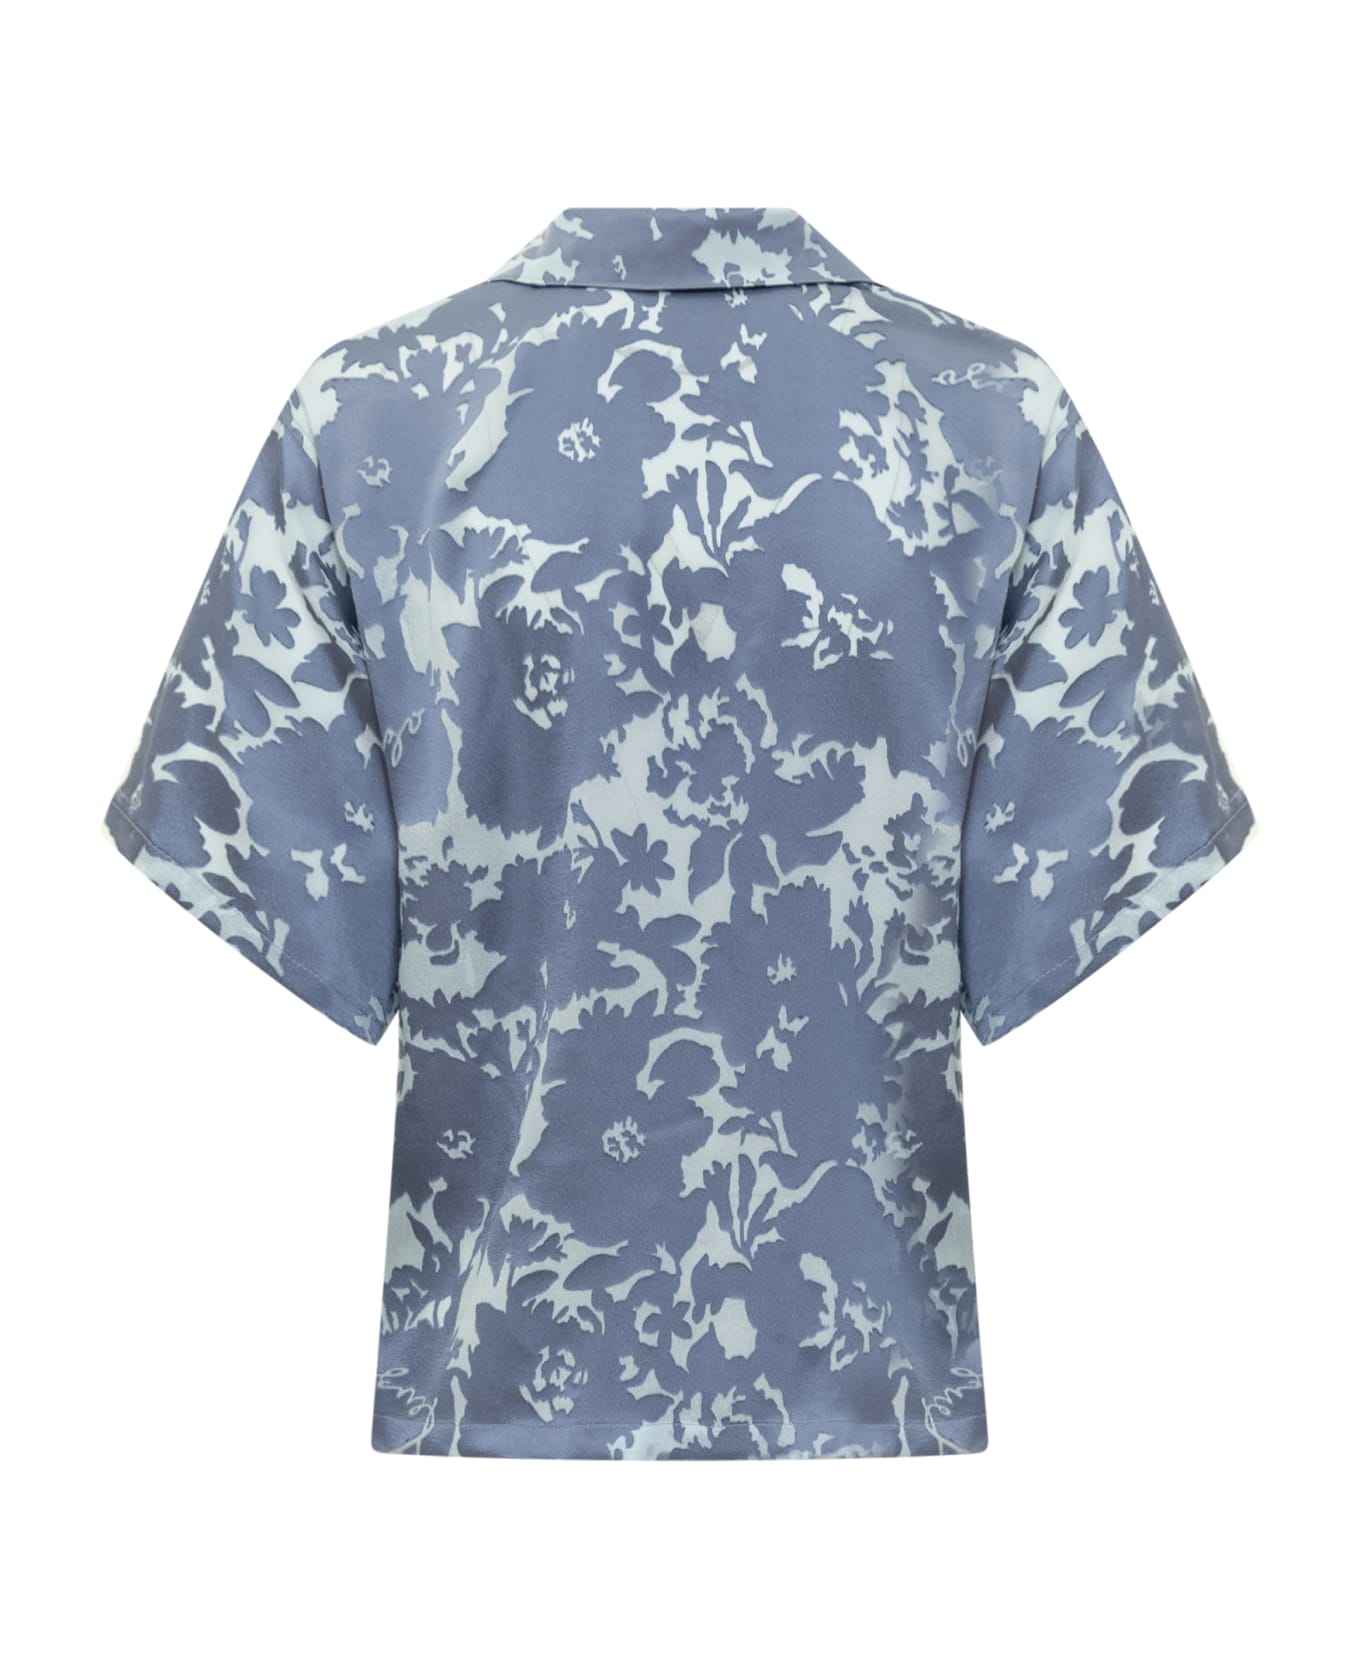 Kenzo Shirt With Flower Camo Pattern - BLUE